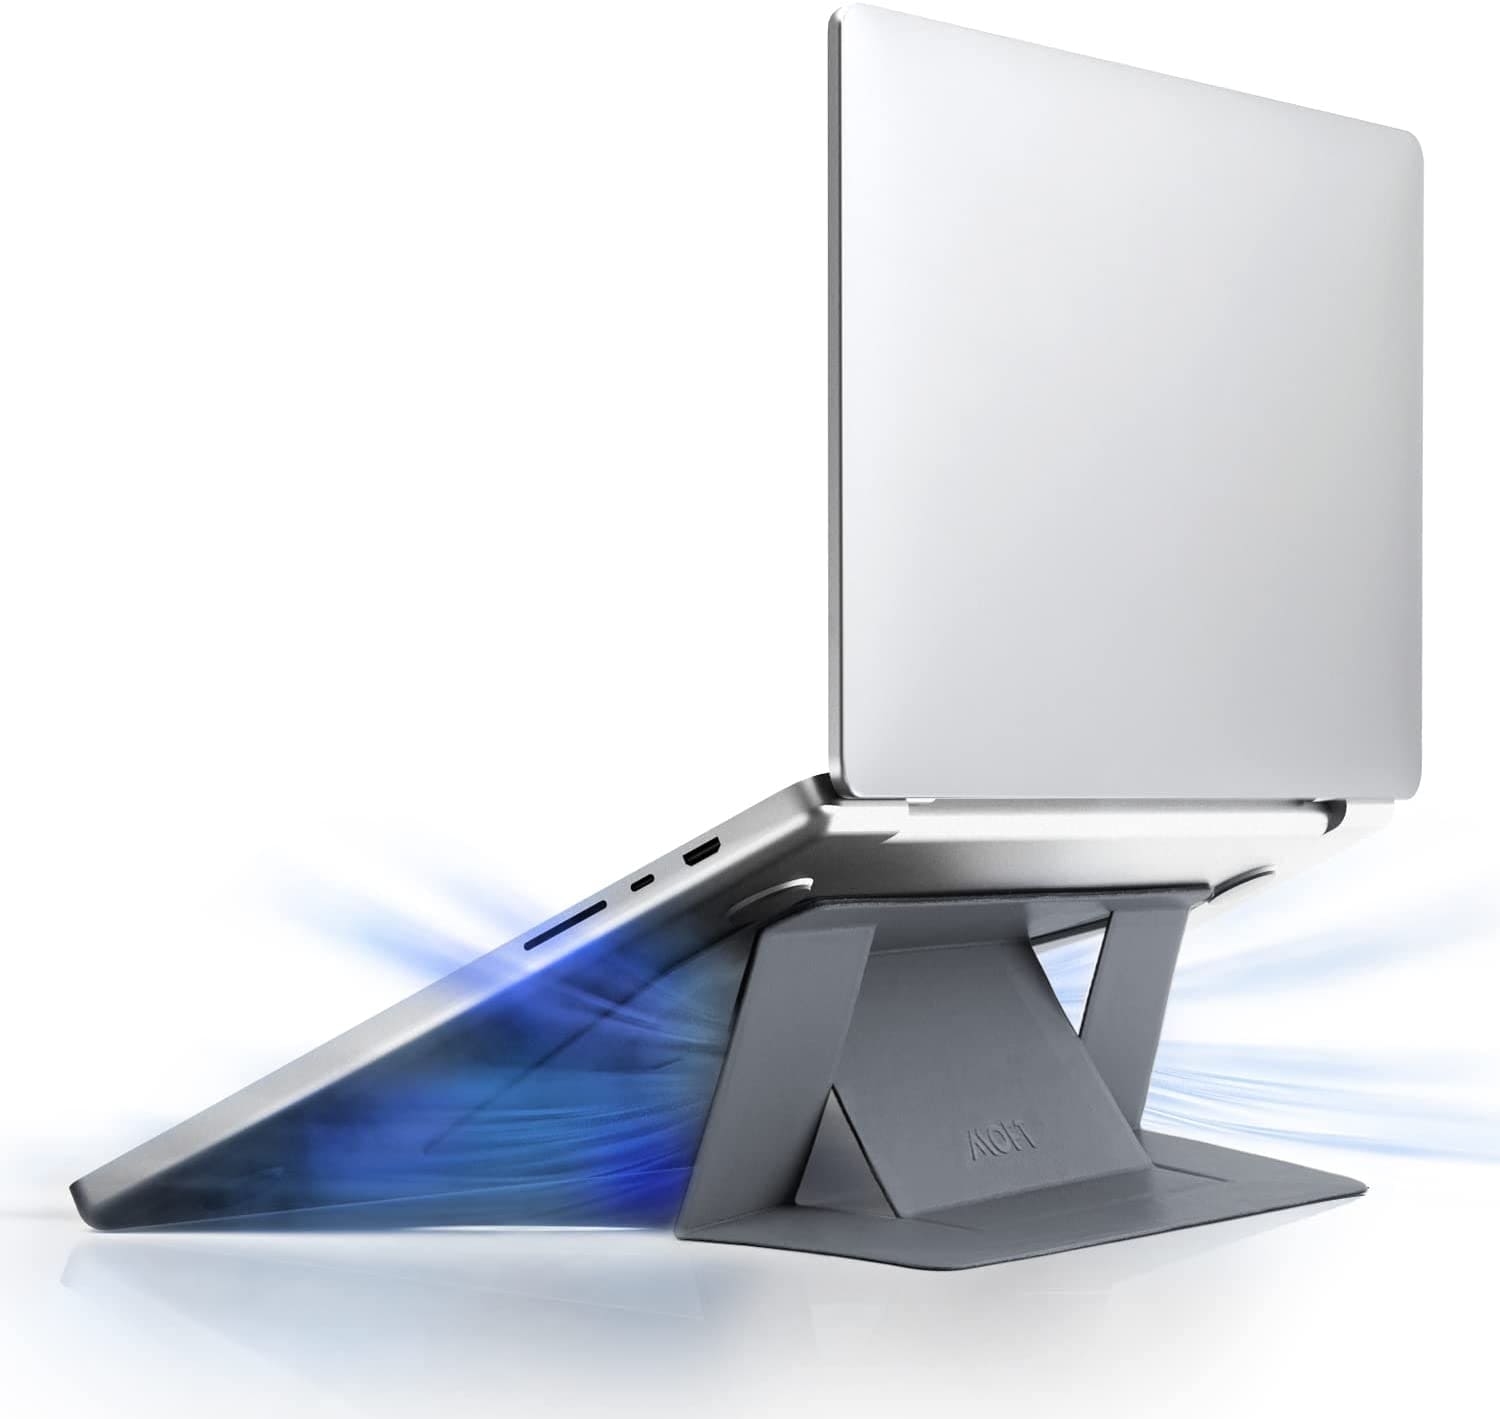 MOFT ノートパソコンスタンド グラフェン構造 Cooling Stand 表面温度−5° 高い冷却性 放熱穴付 PCスタンド 軽量 放熱機能  MacBook レビュー 100日保証